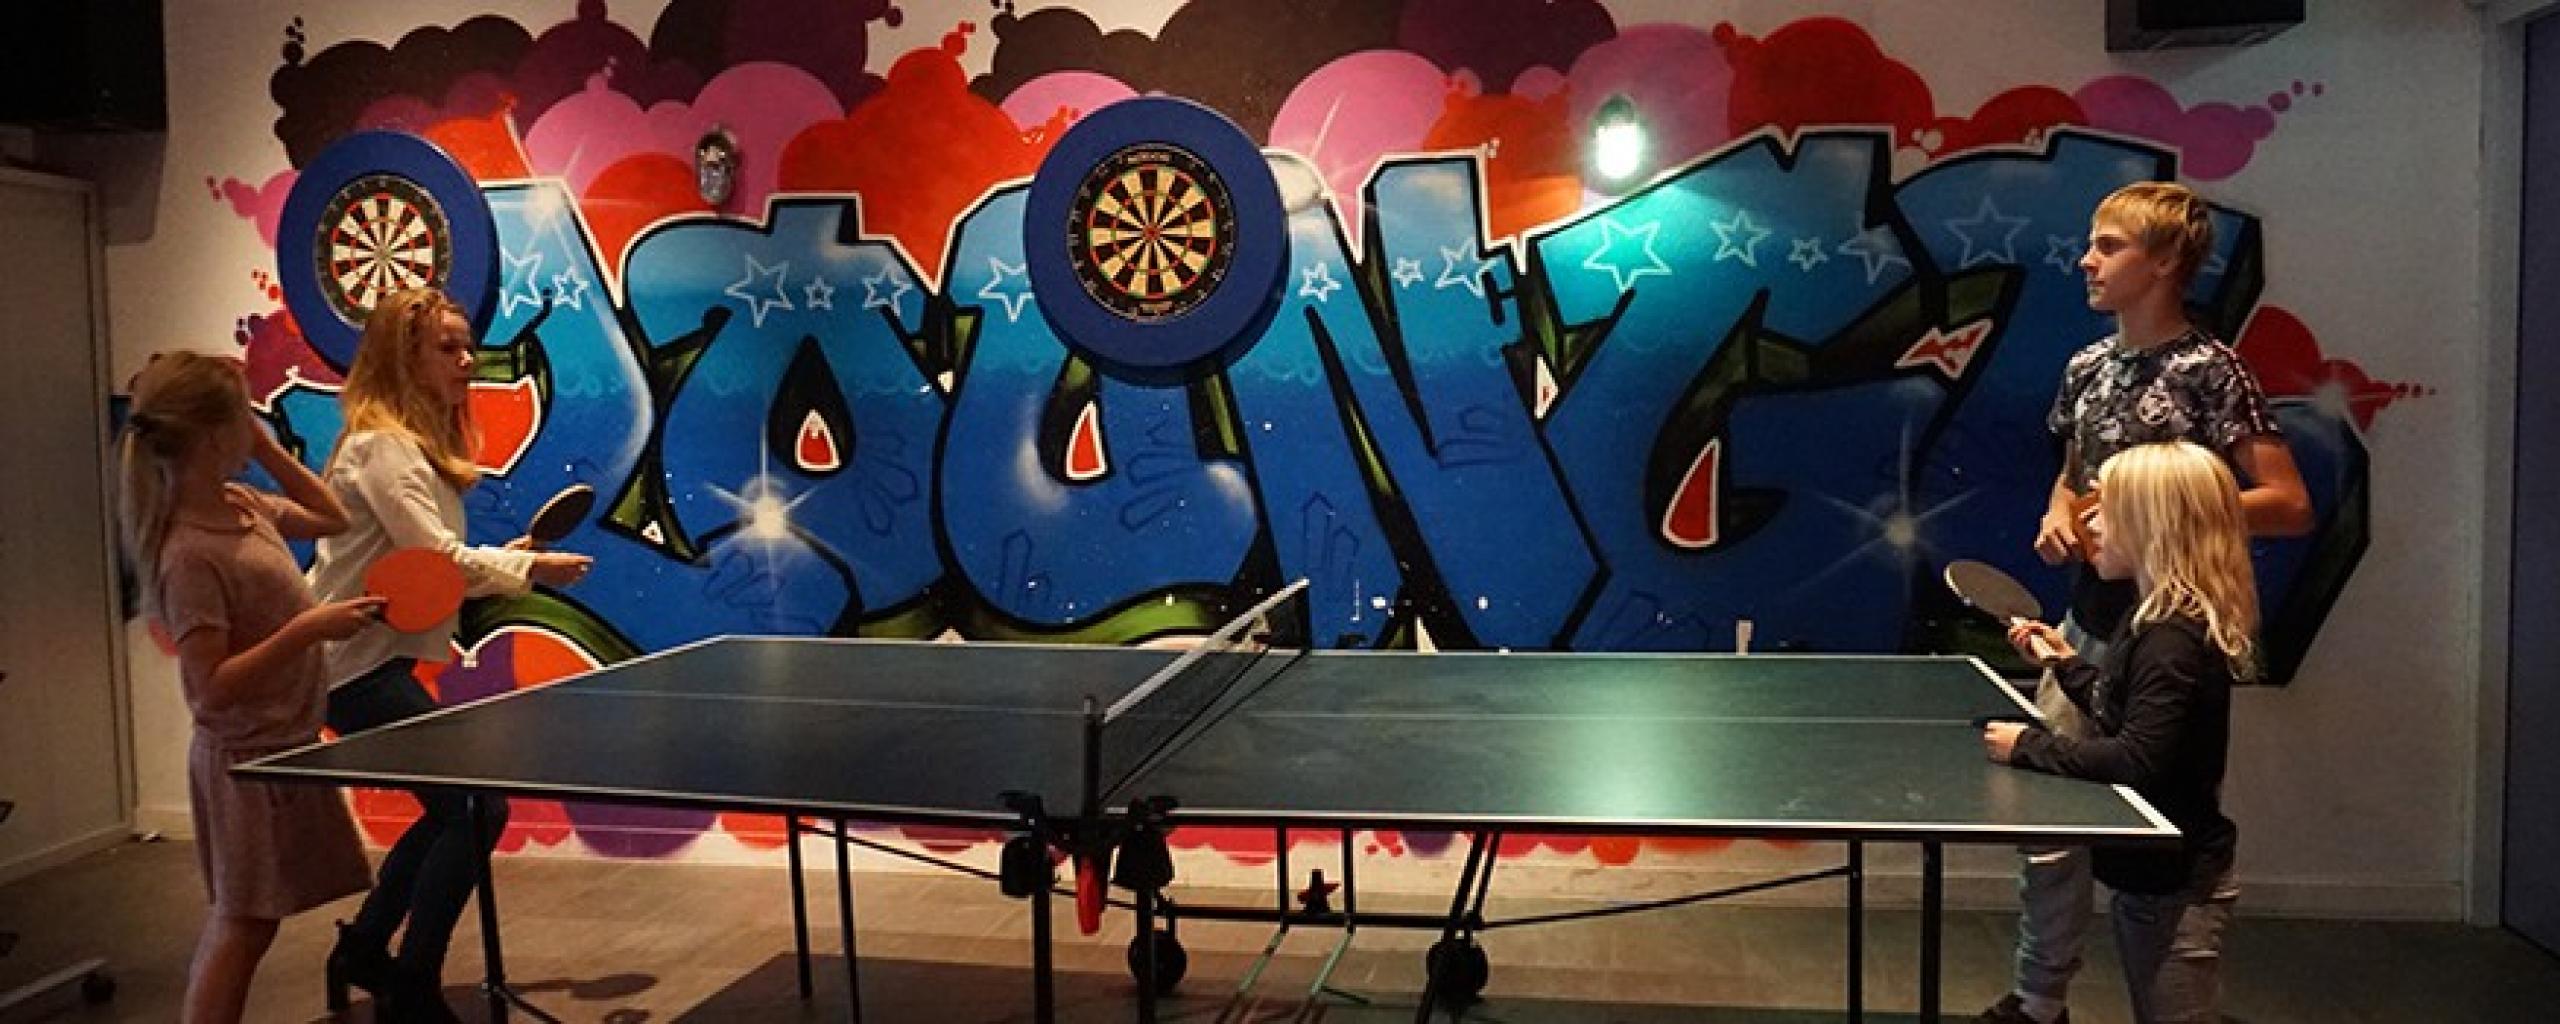 The Lounge graffitimuur en tafeltennistafel